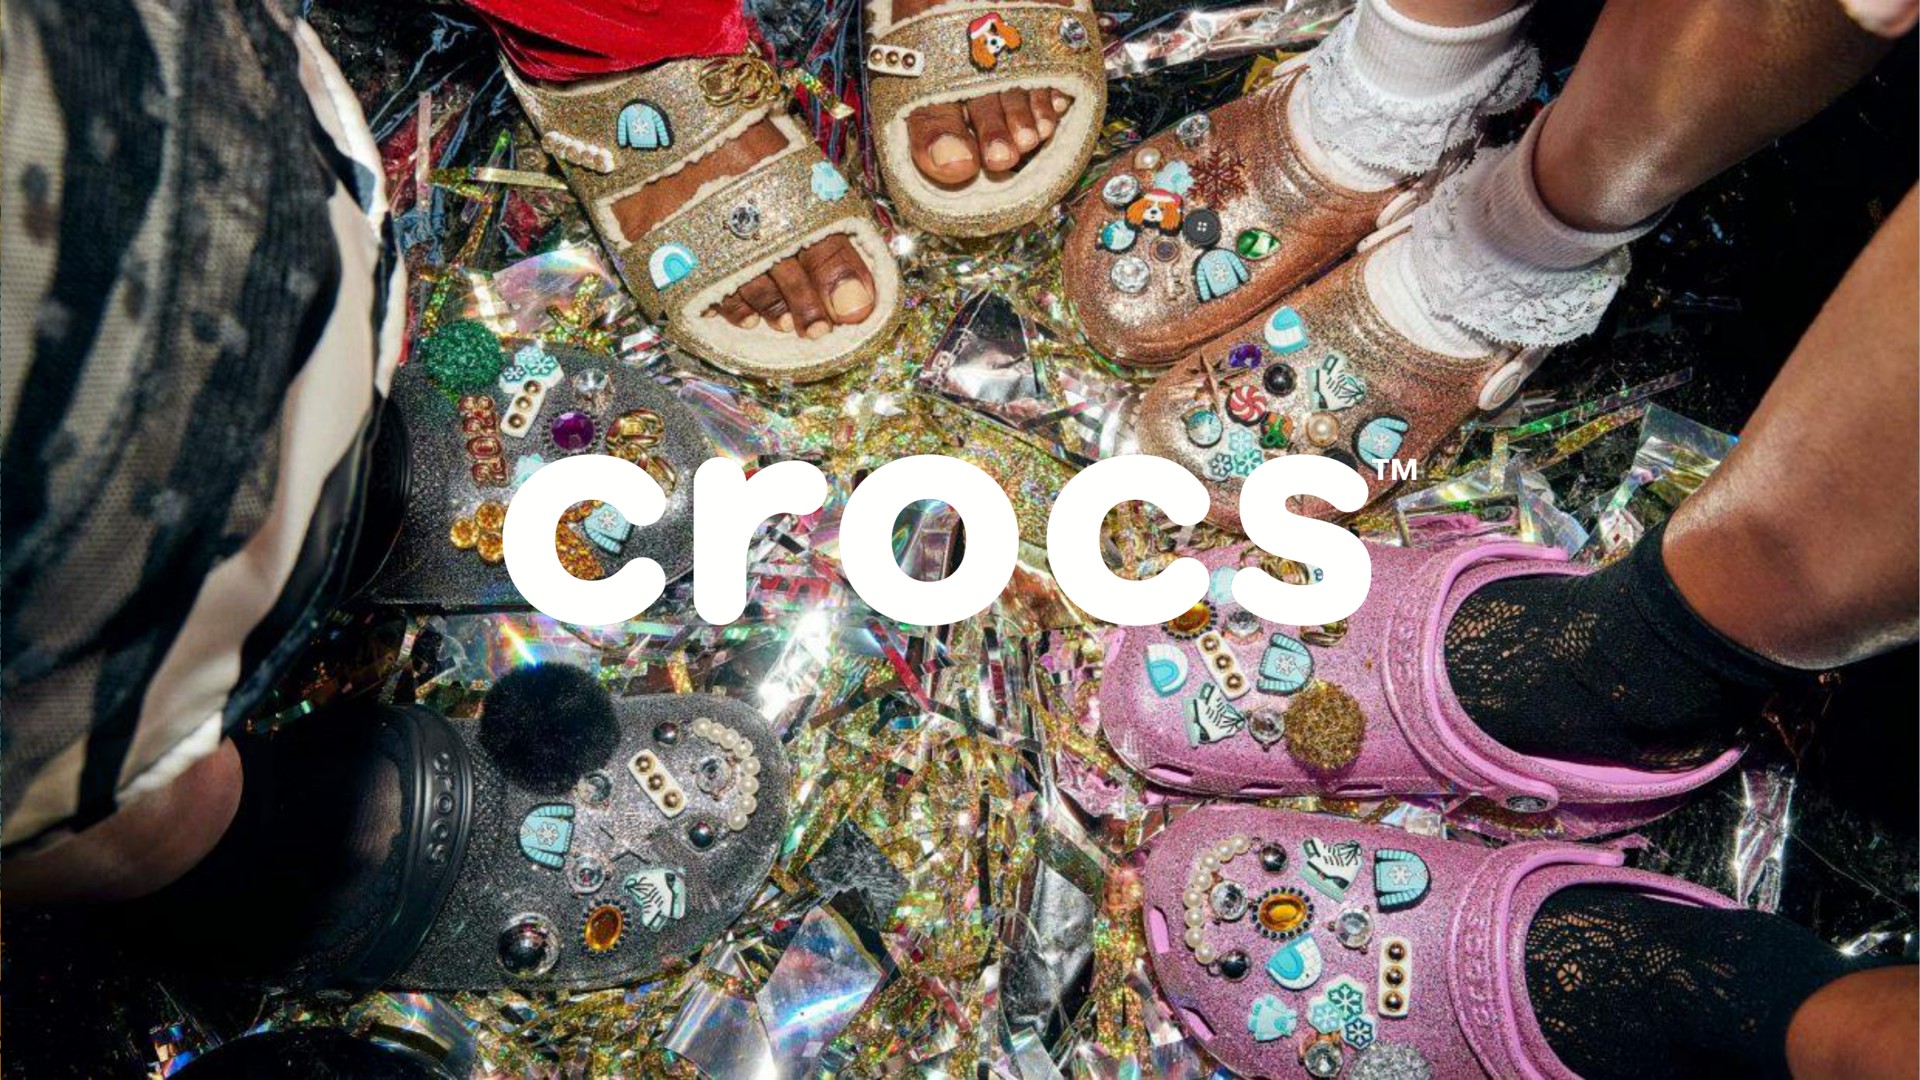  | Crocs